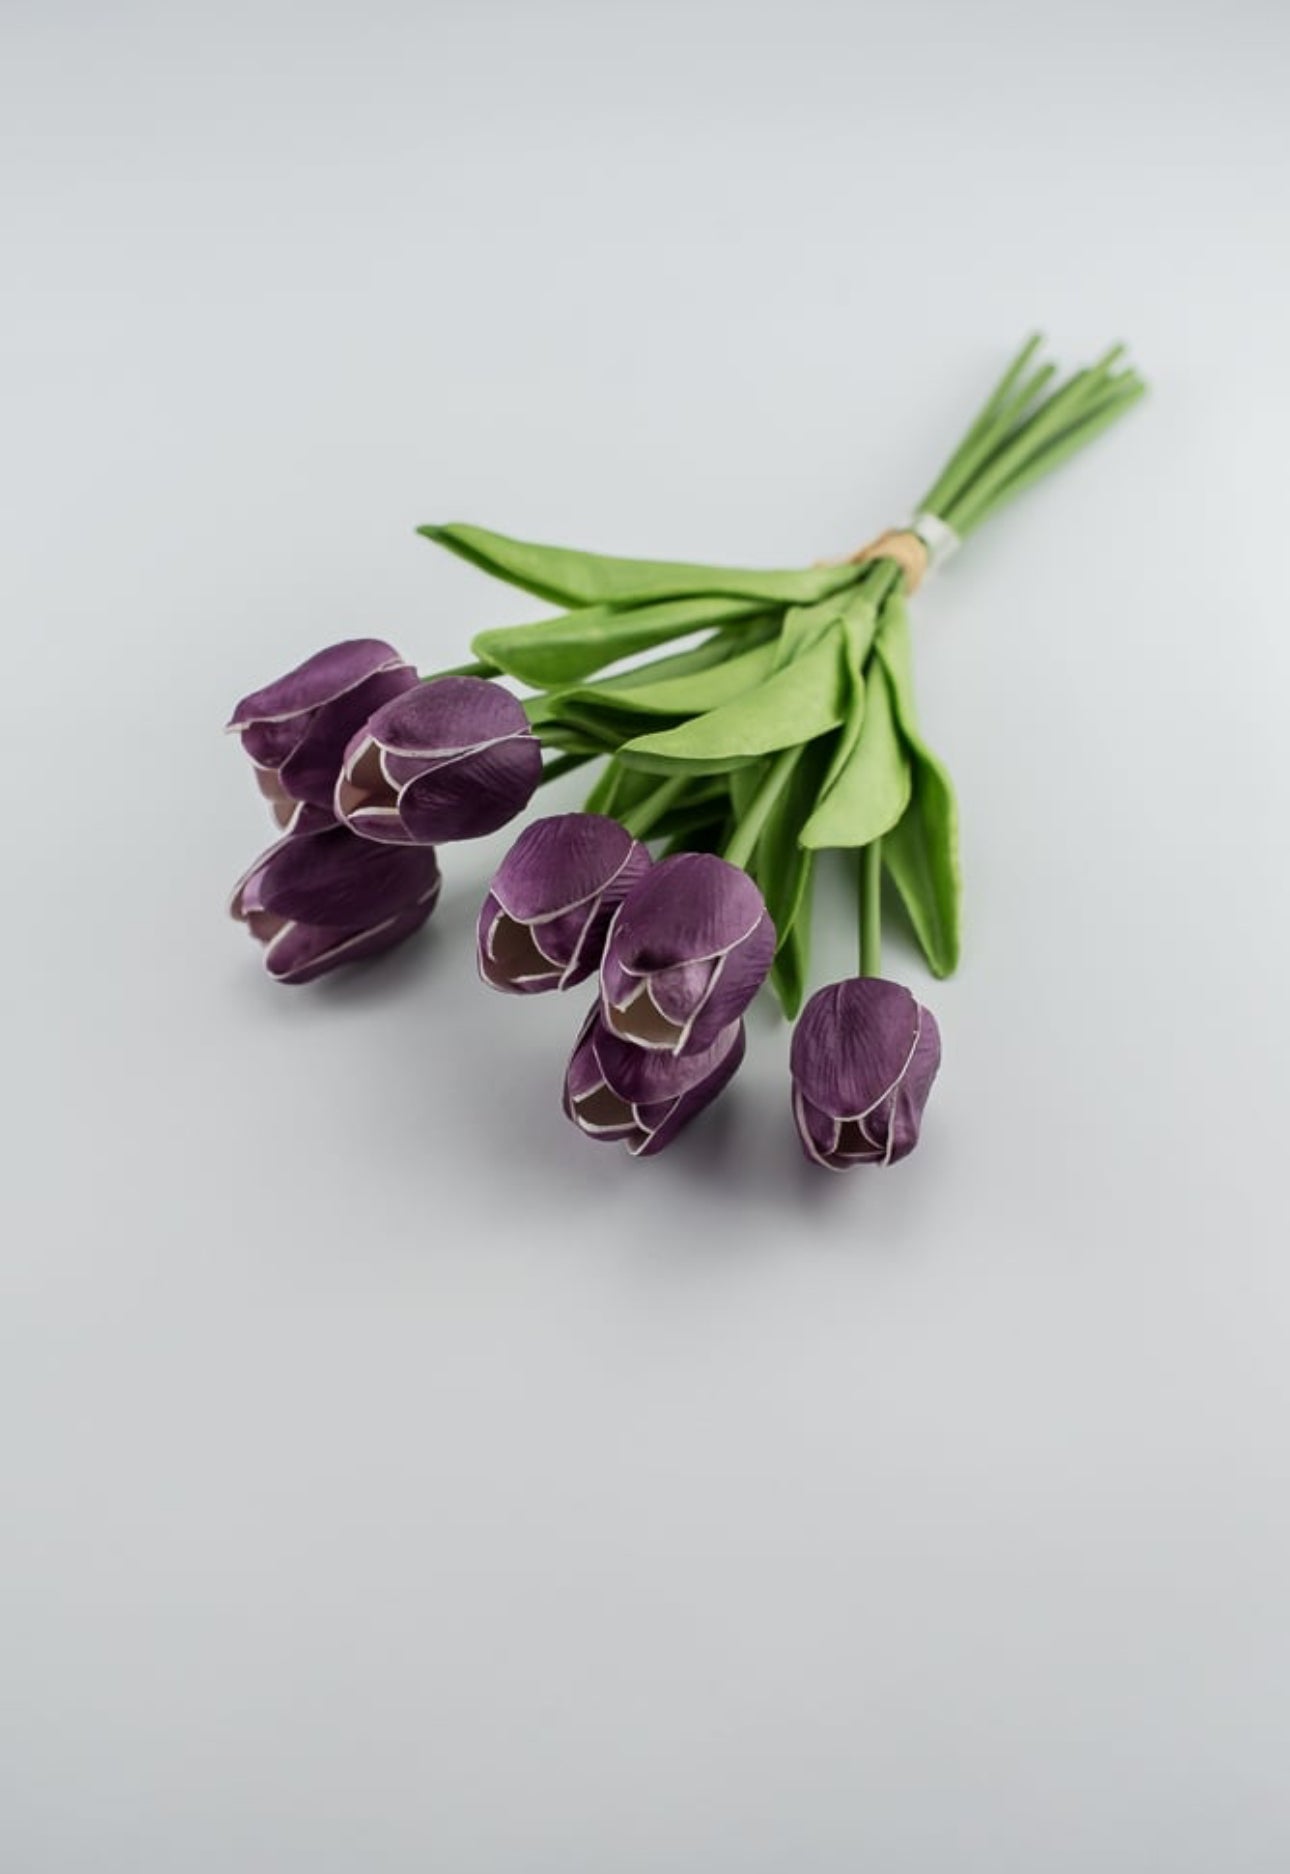 Violet soft touch, life like tulip bundle - Greenery Market2260017VL